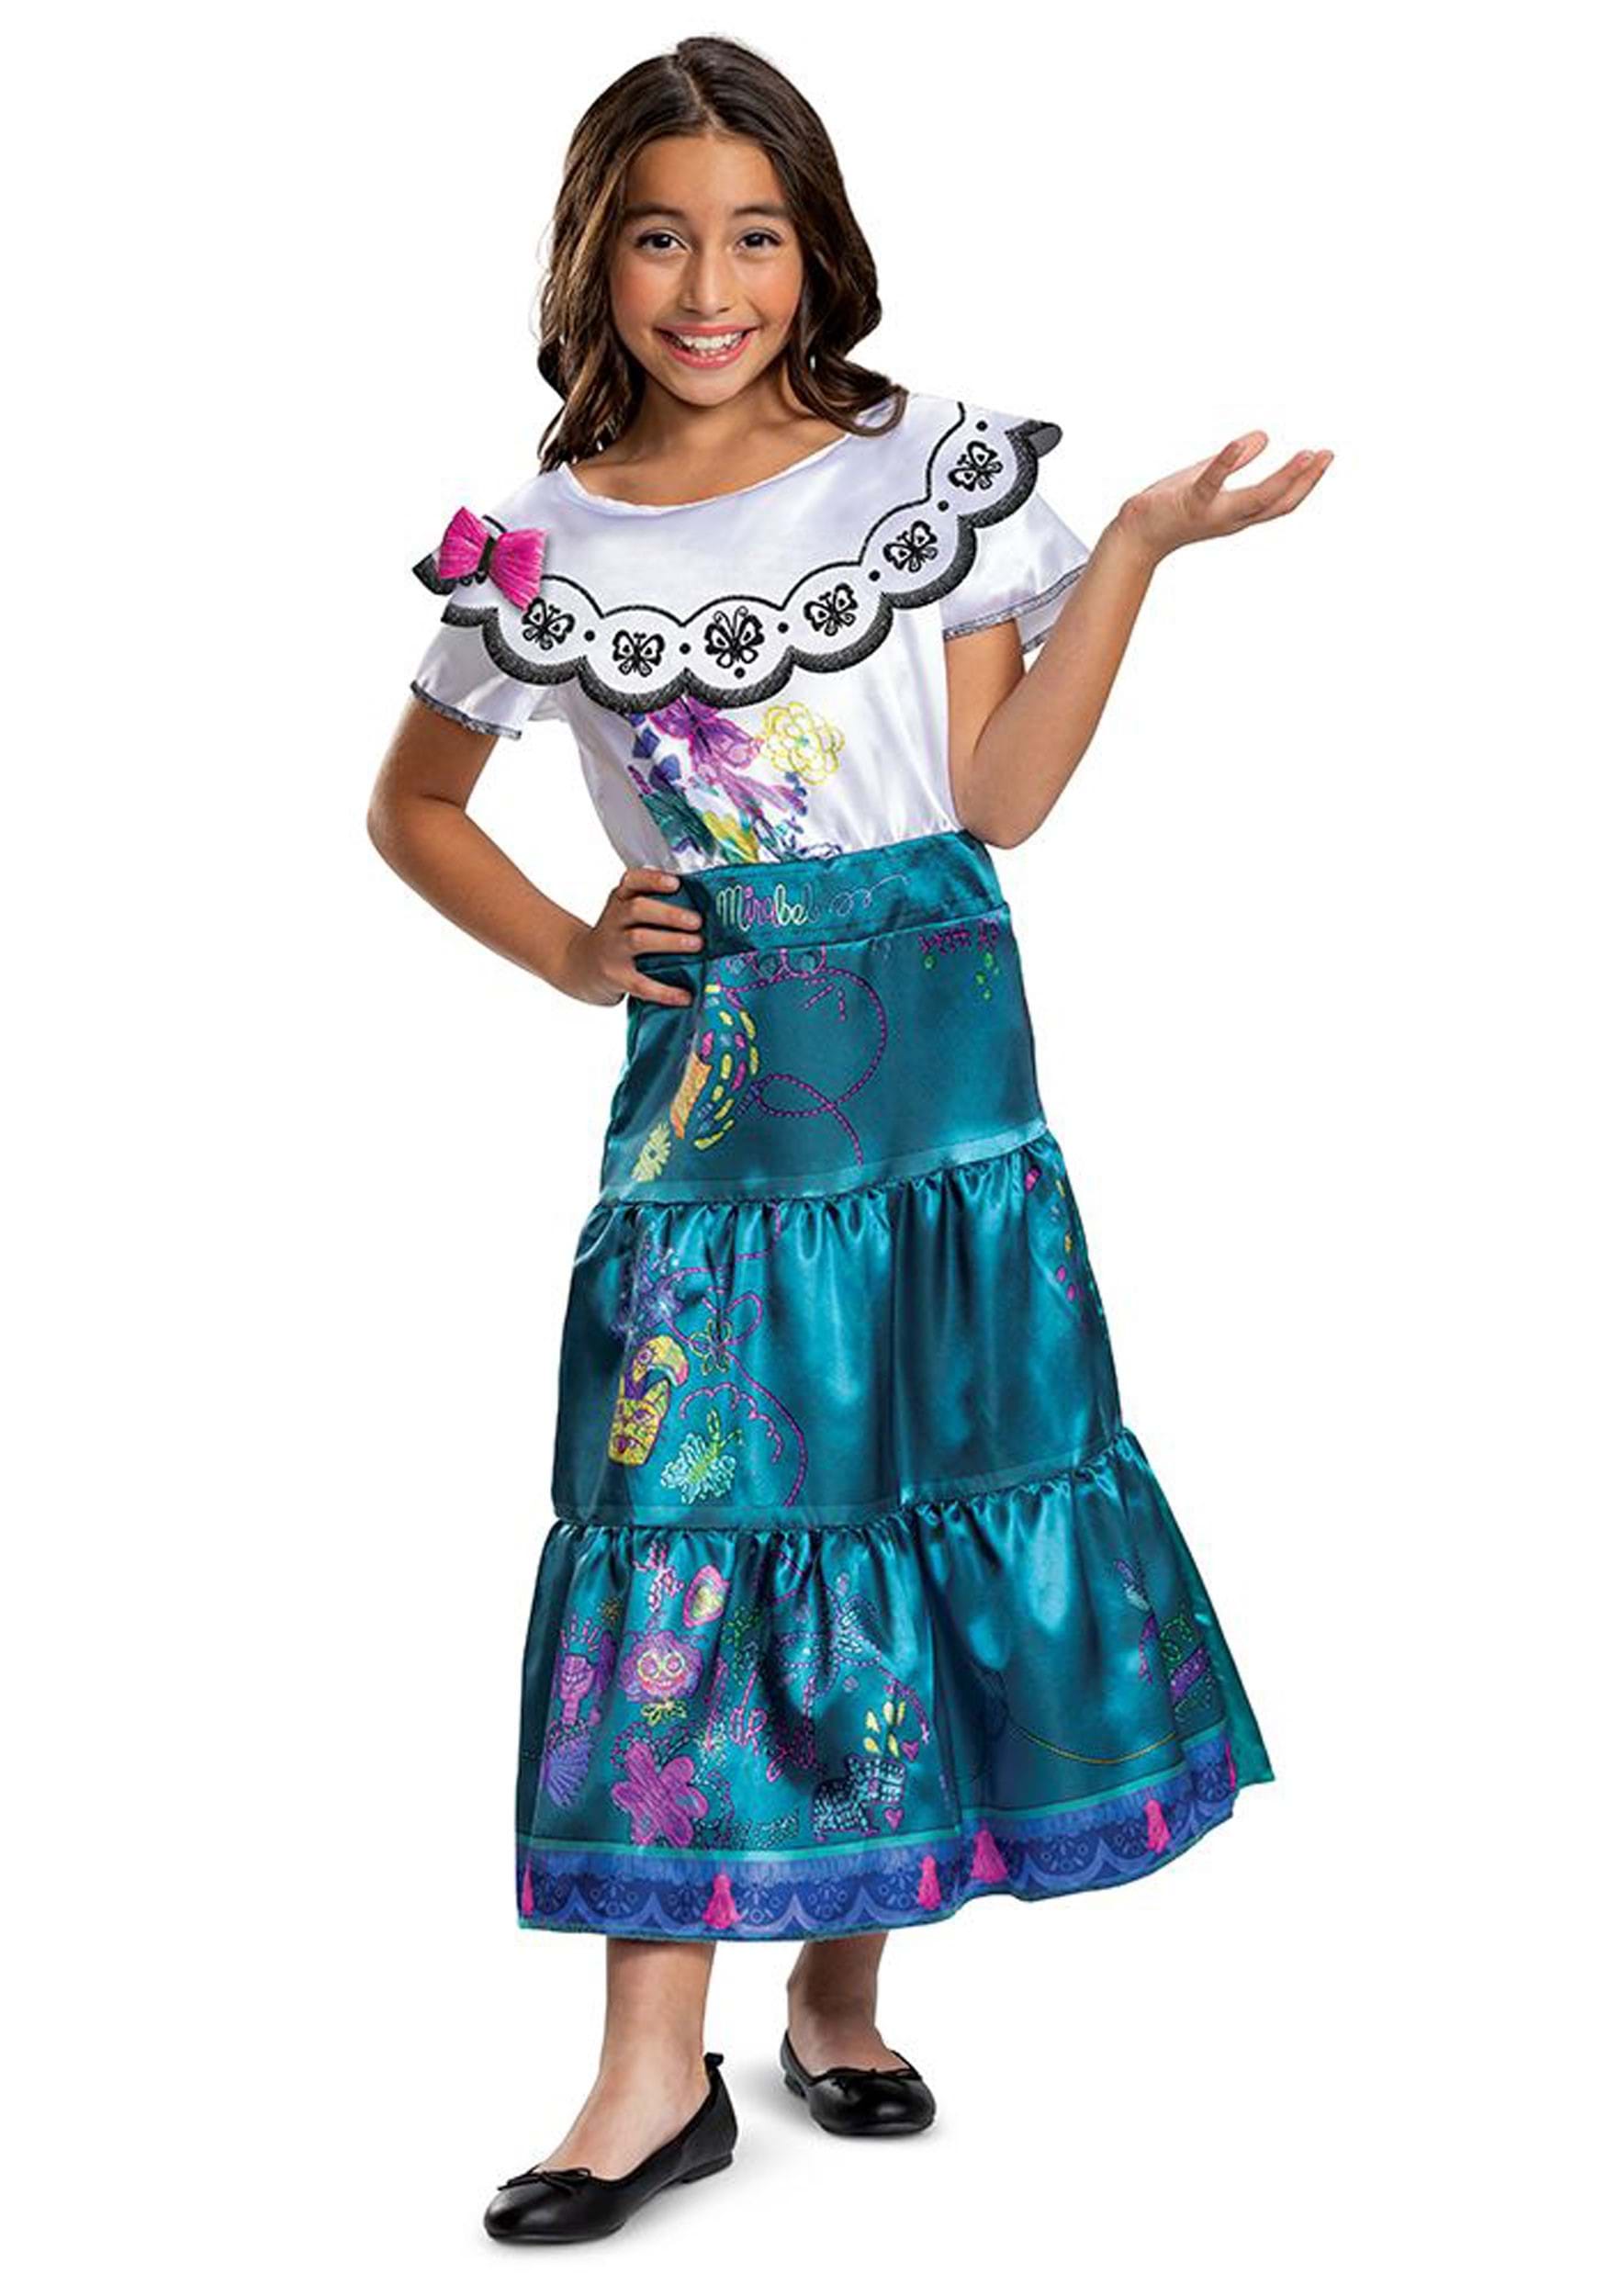 Encanto Mirabel Classic Costume for Kids